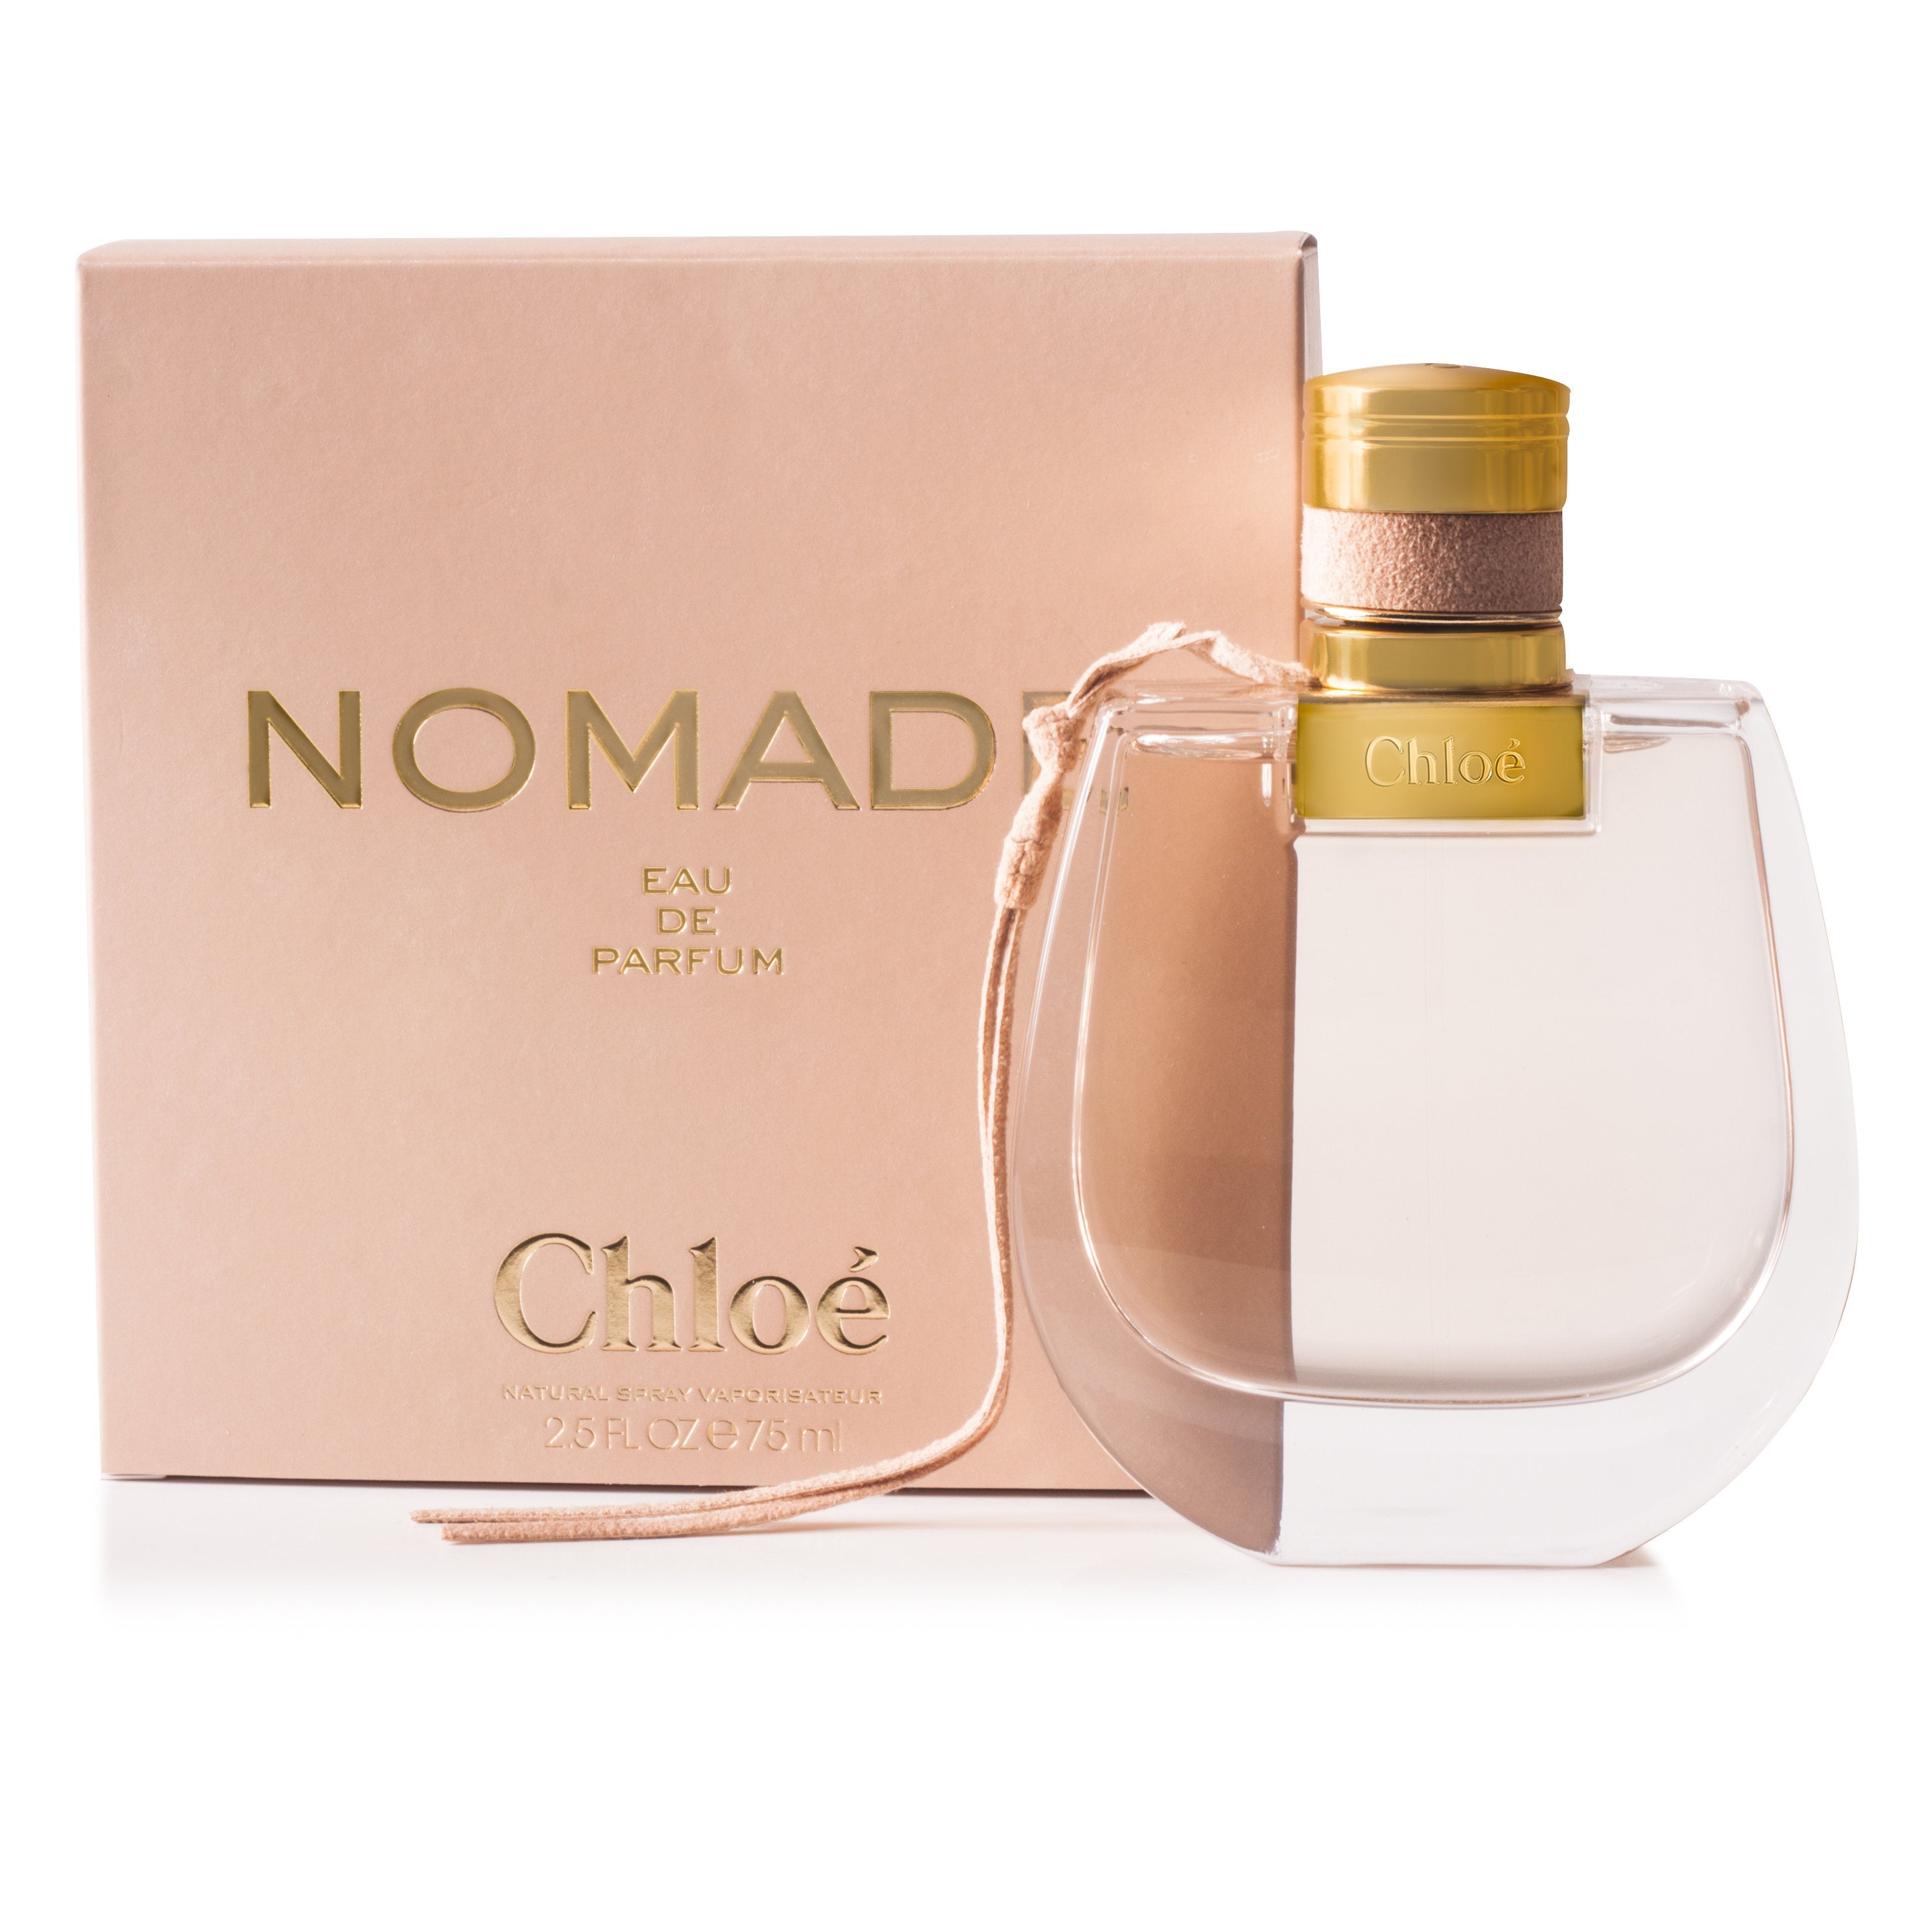 Parfum Women – Eau de Perfumania by Chloe Spray for Nomade